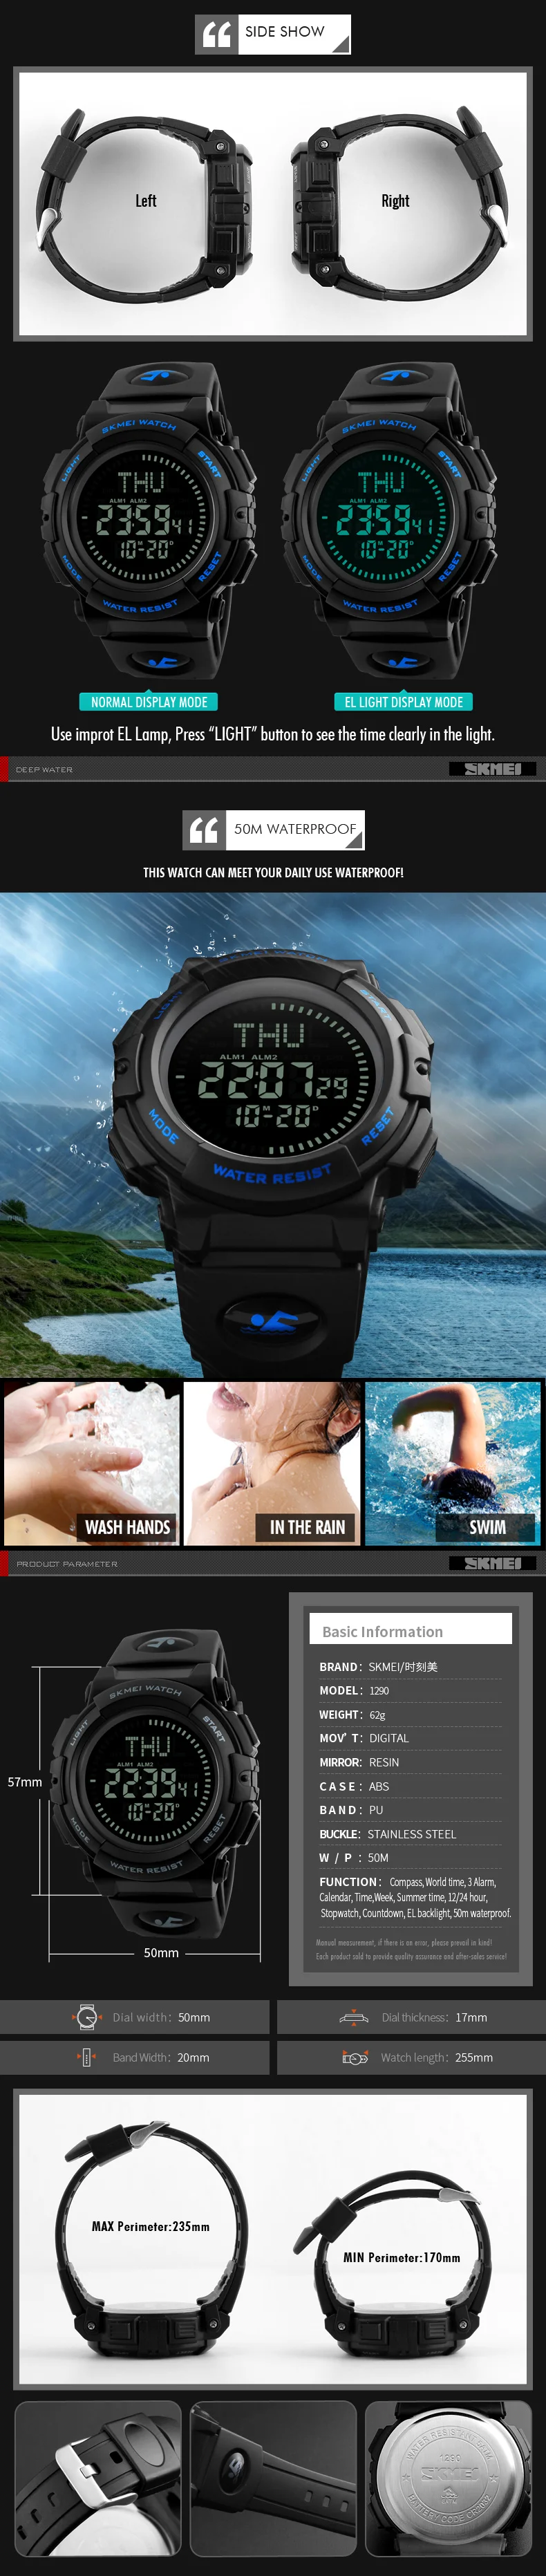 SKMEI 1290 Multifunction Compass Waterproof World Time Sports Watch for Men